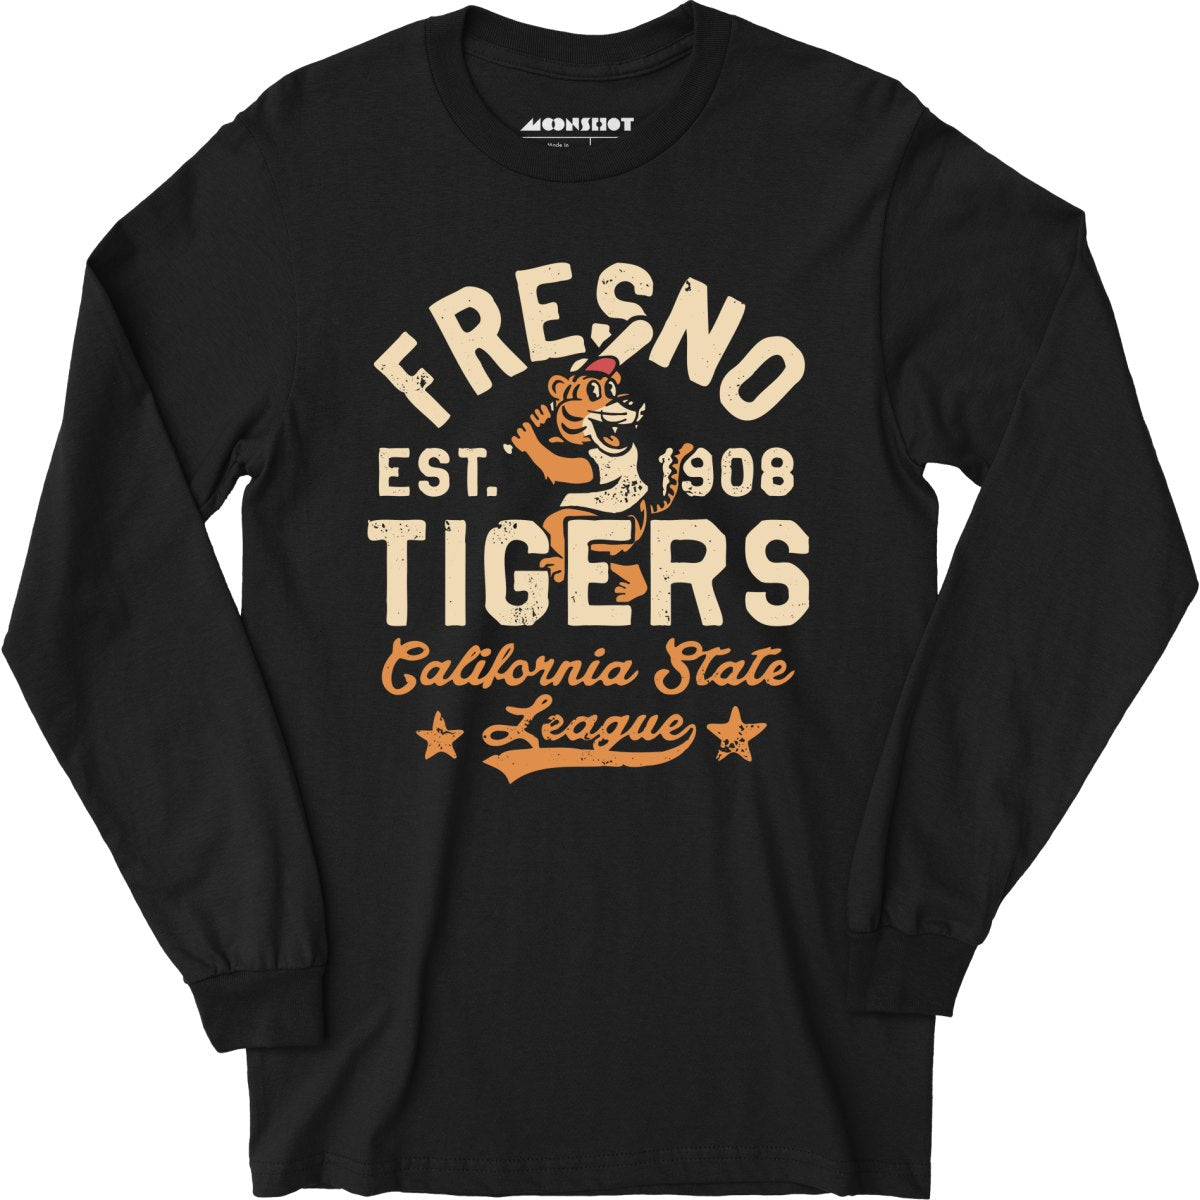 Fresno Tigers - California - Vintage Defunct Baseball Teams - Long Sleeve T-Shirt